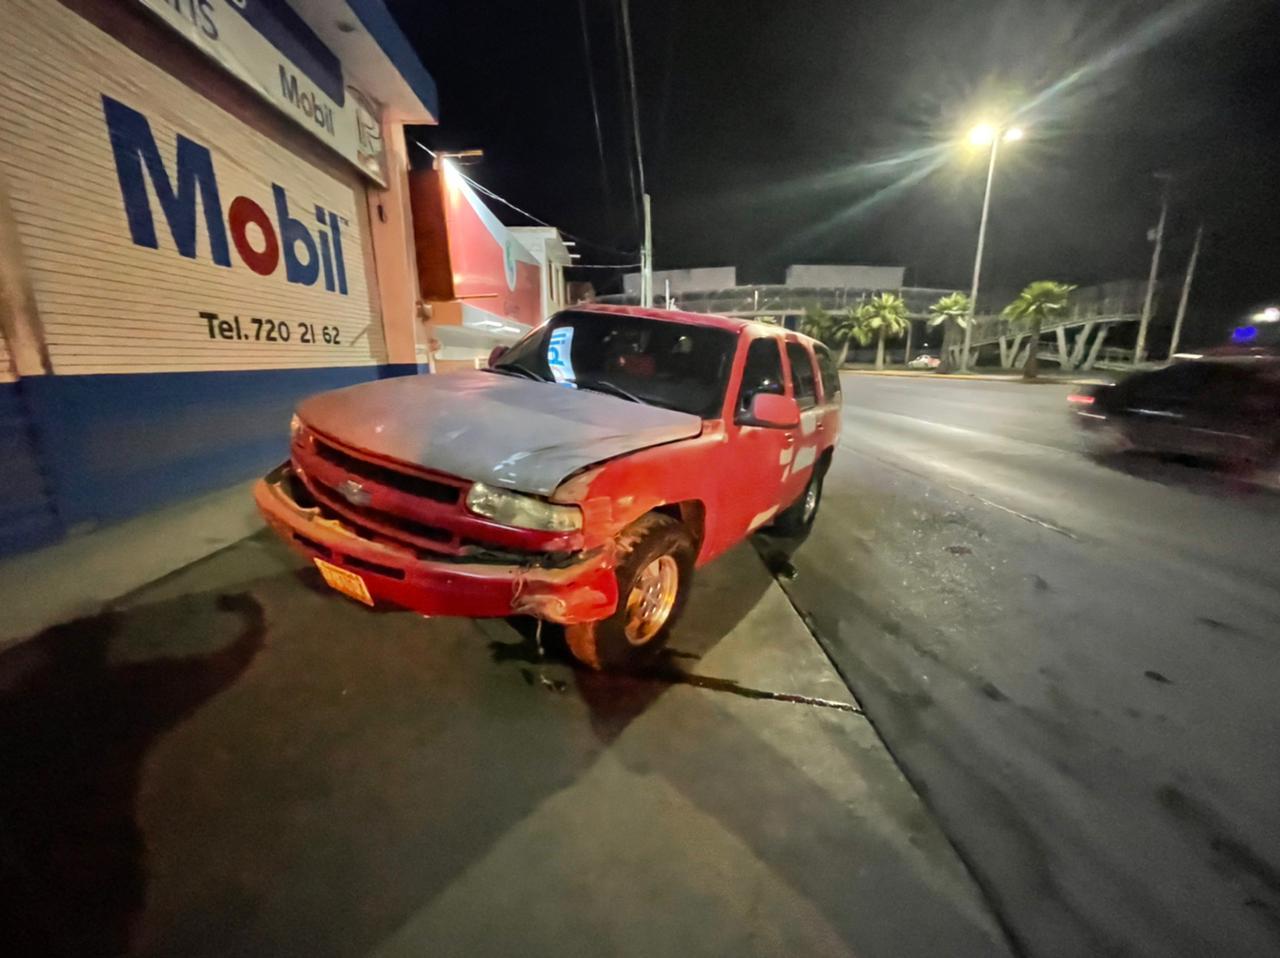 Conductor abandona camioneta tras accidente en Torreón